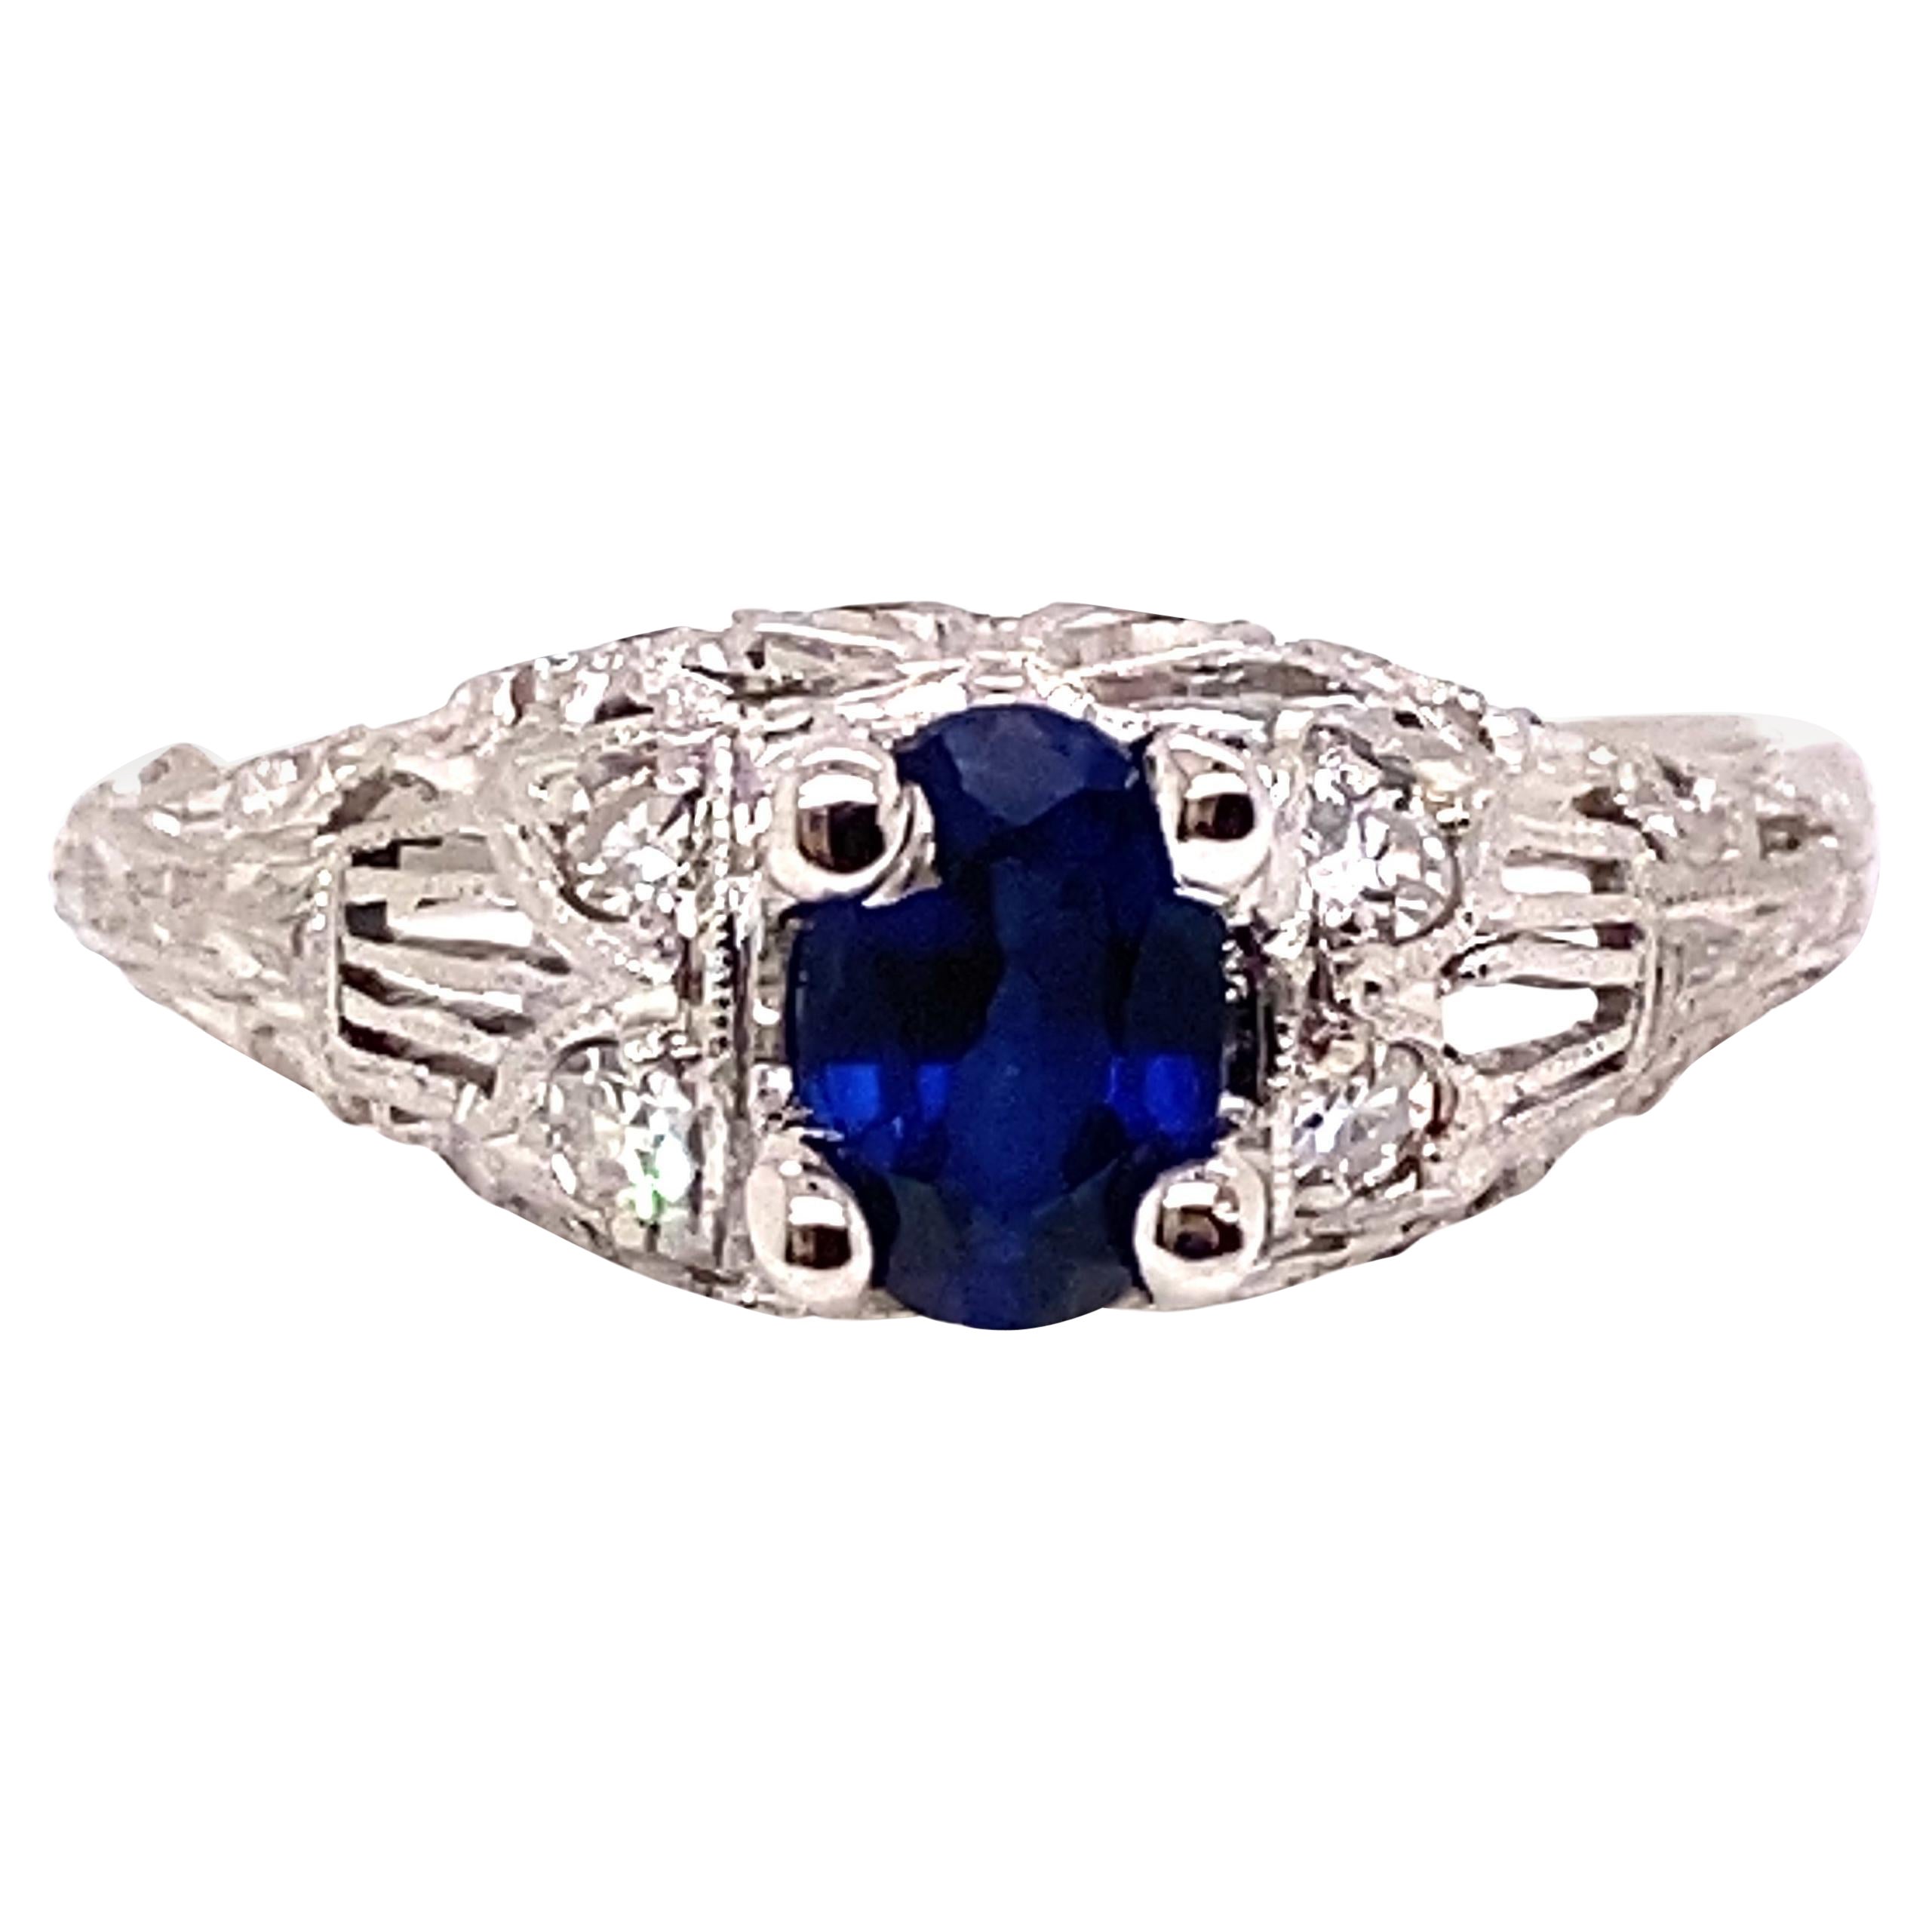 Vintage Sapphire Diamond Engagement Ring .82ct Platinum Deco Original 1920s